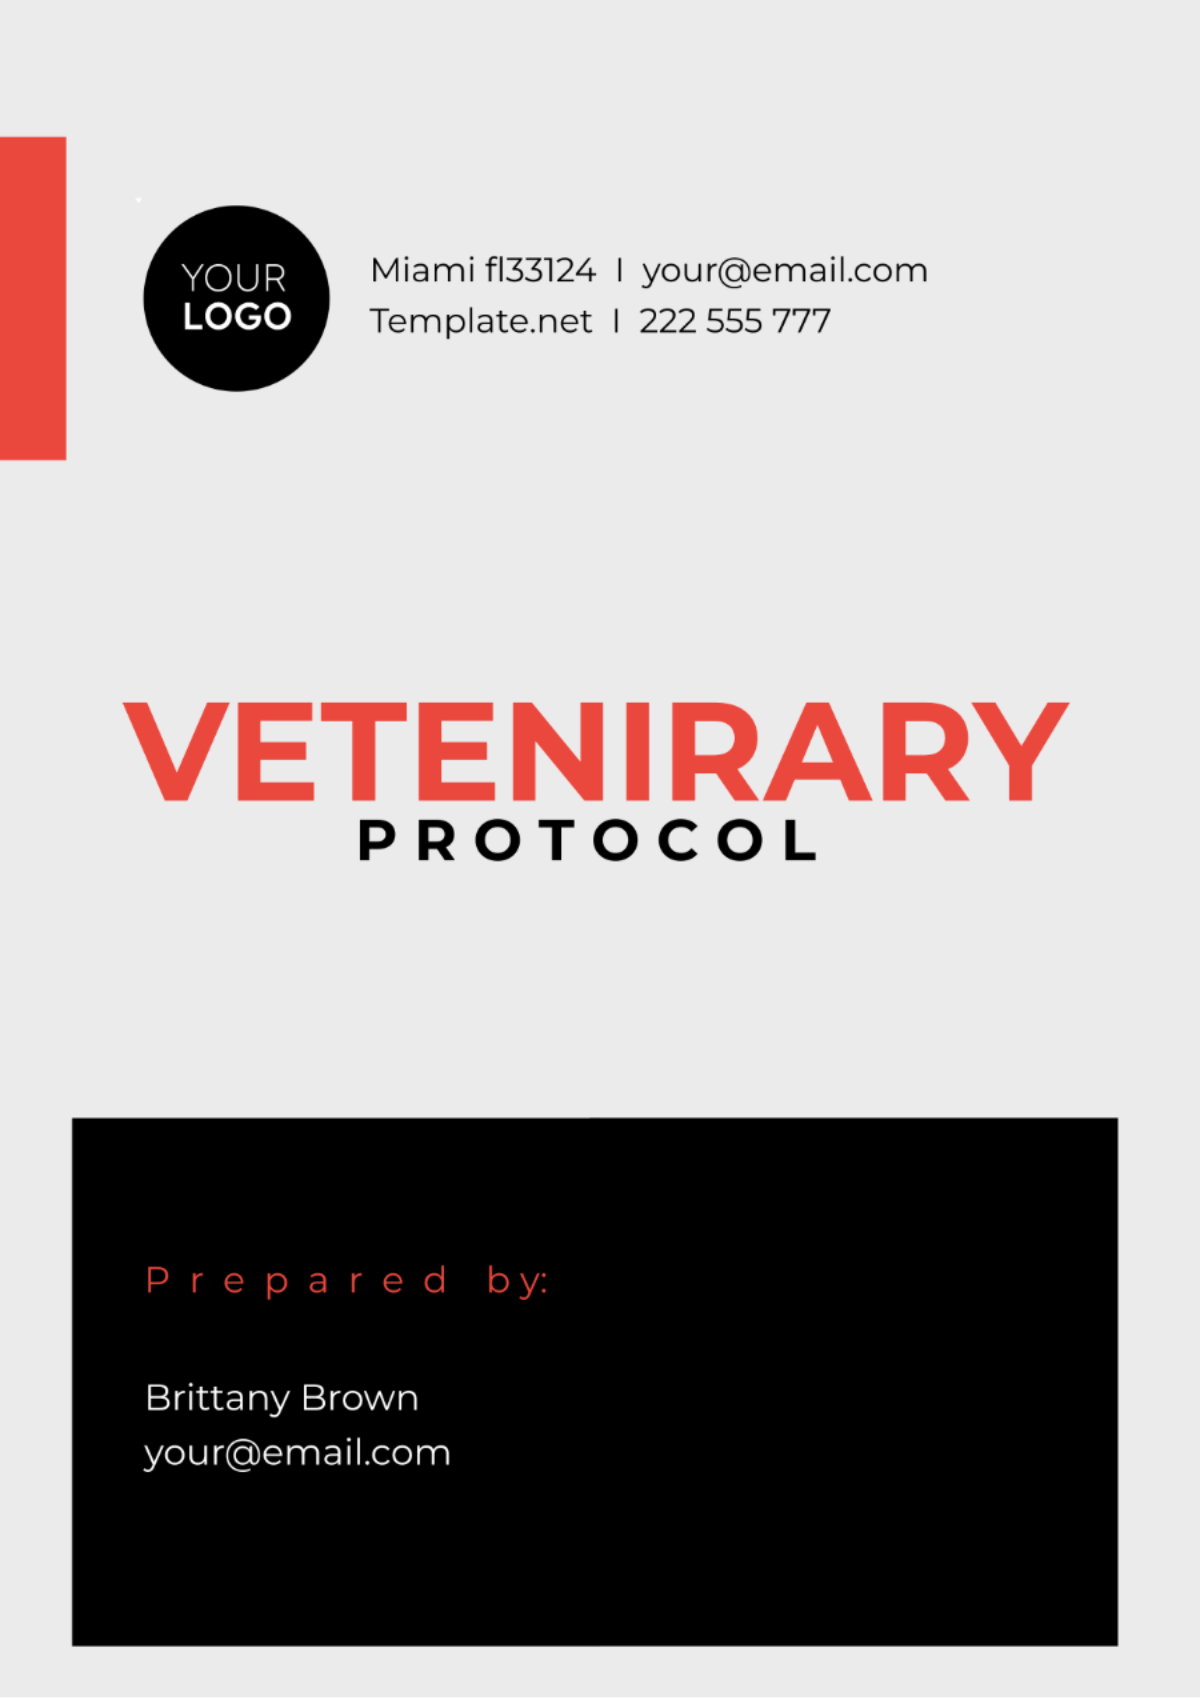 Free Veterinary Protocol Template